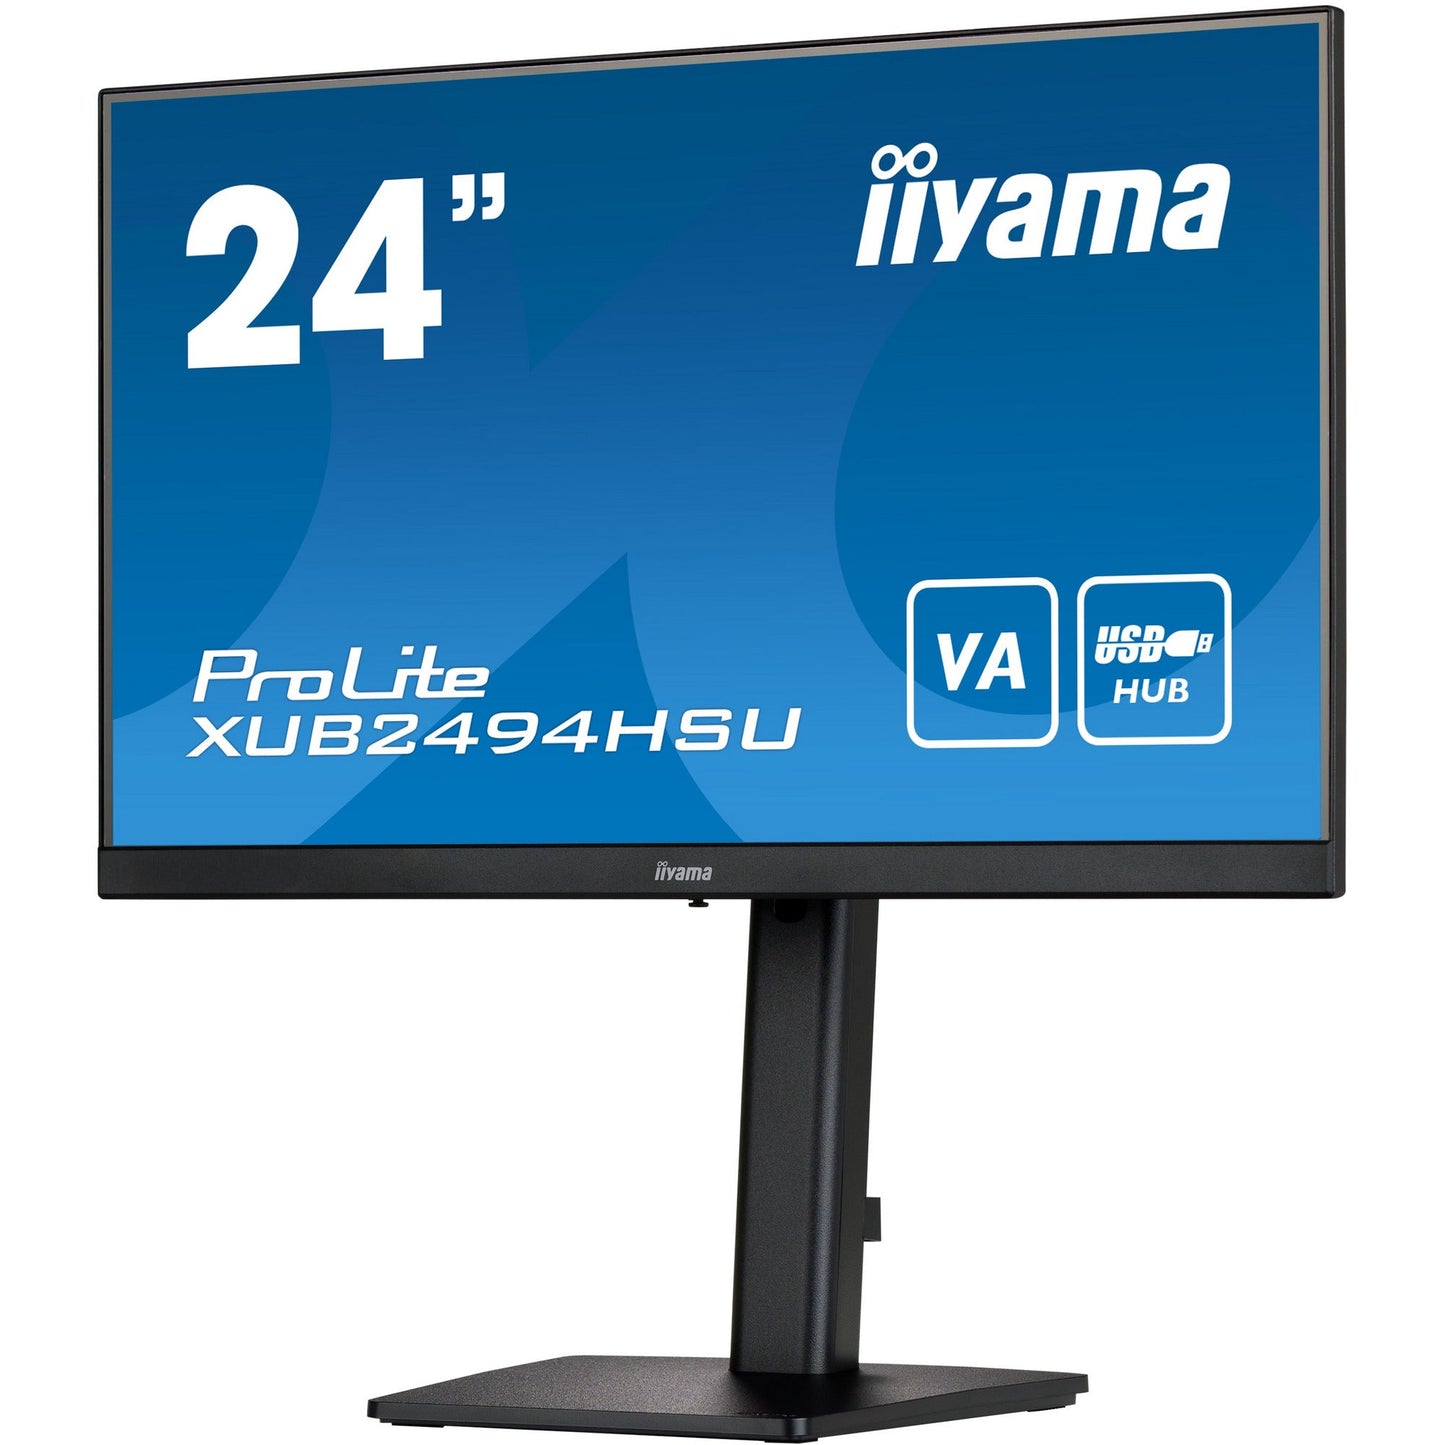 Dark Cyan Iiyama ProLite XUB2494HSU-B2 24” Full HD monitor with VA panel and height adjustable stand